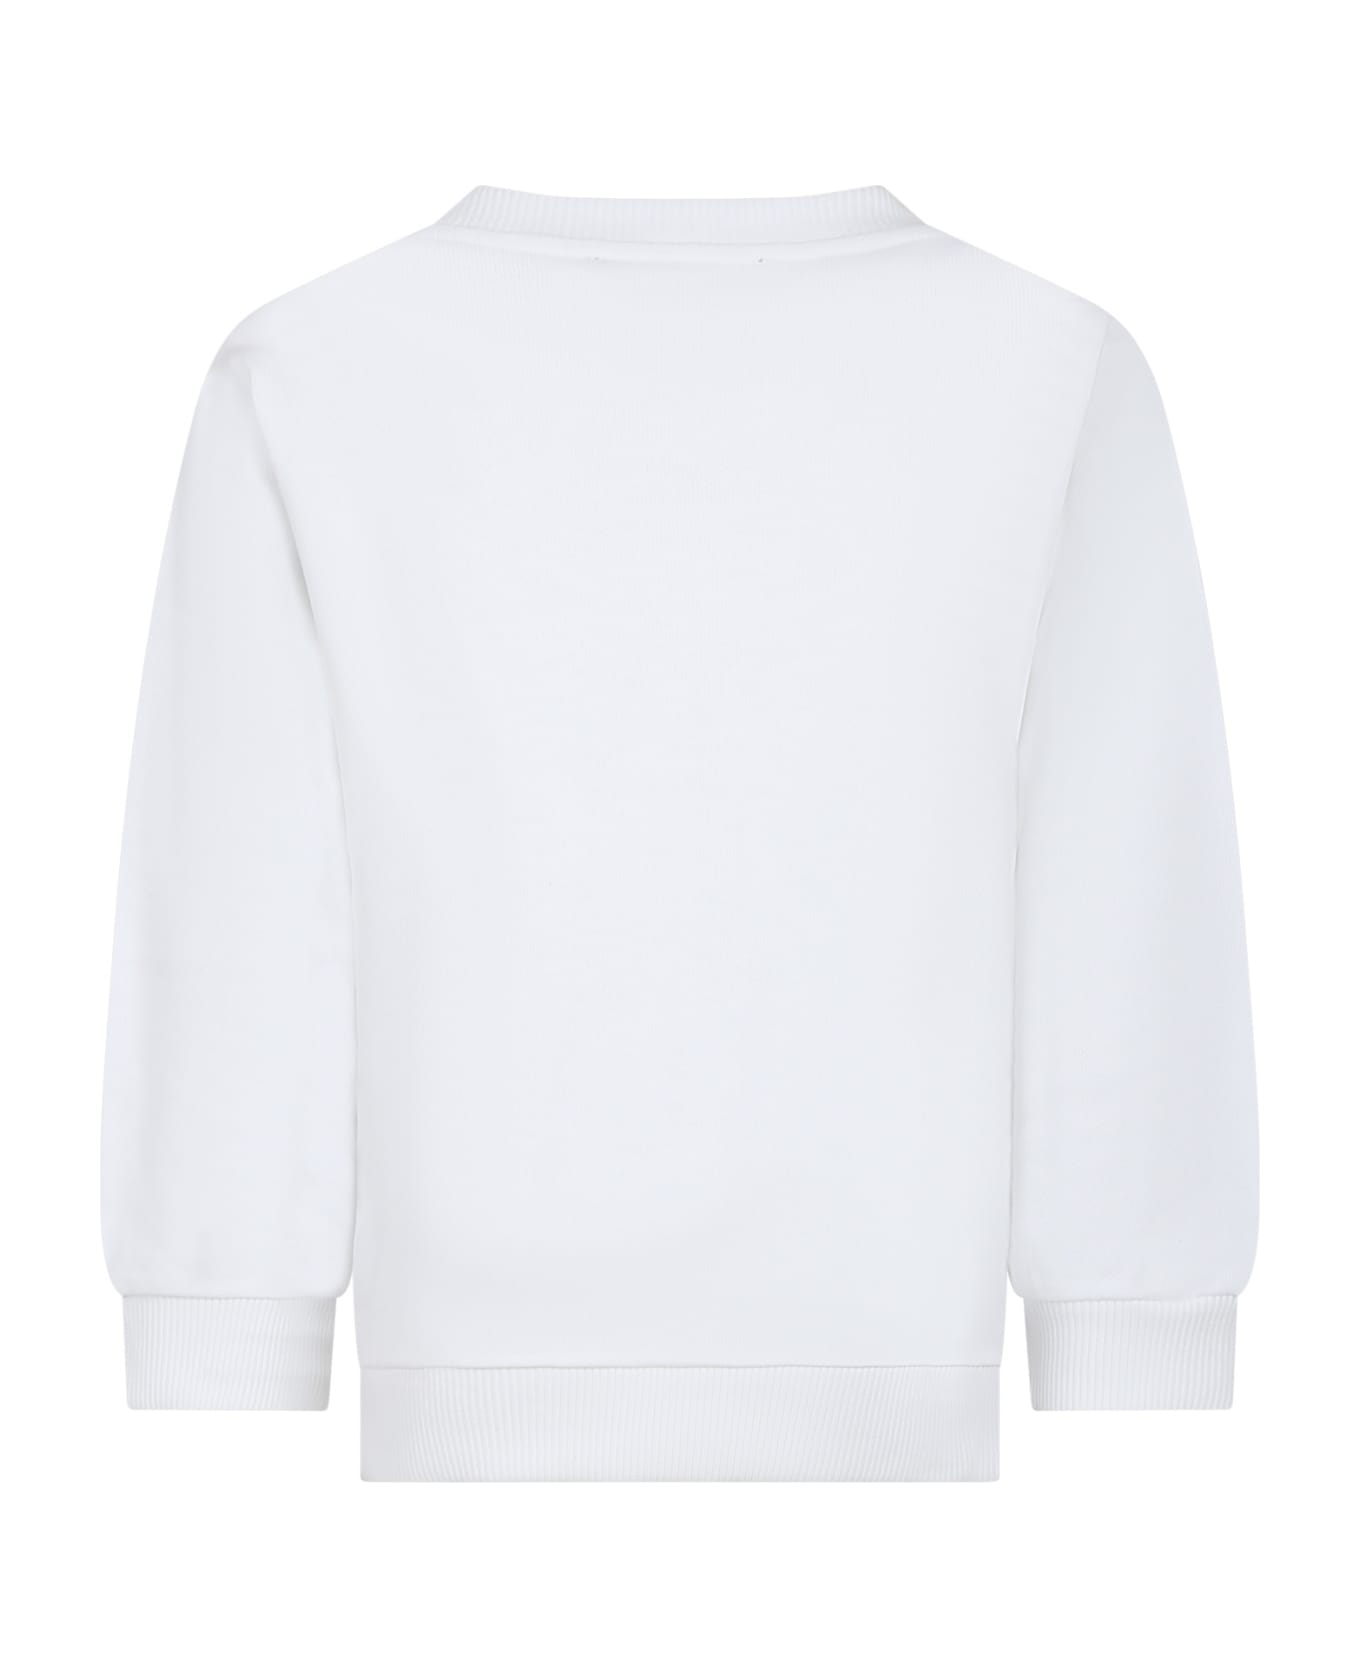 Balmain White Sweatshirt For Kids With Logo - White